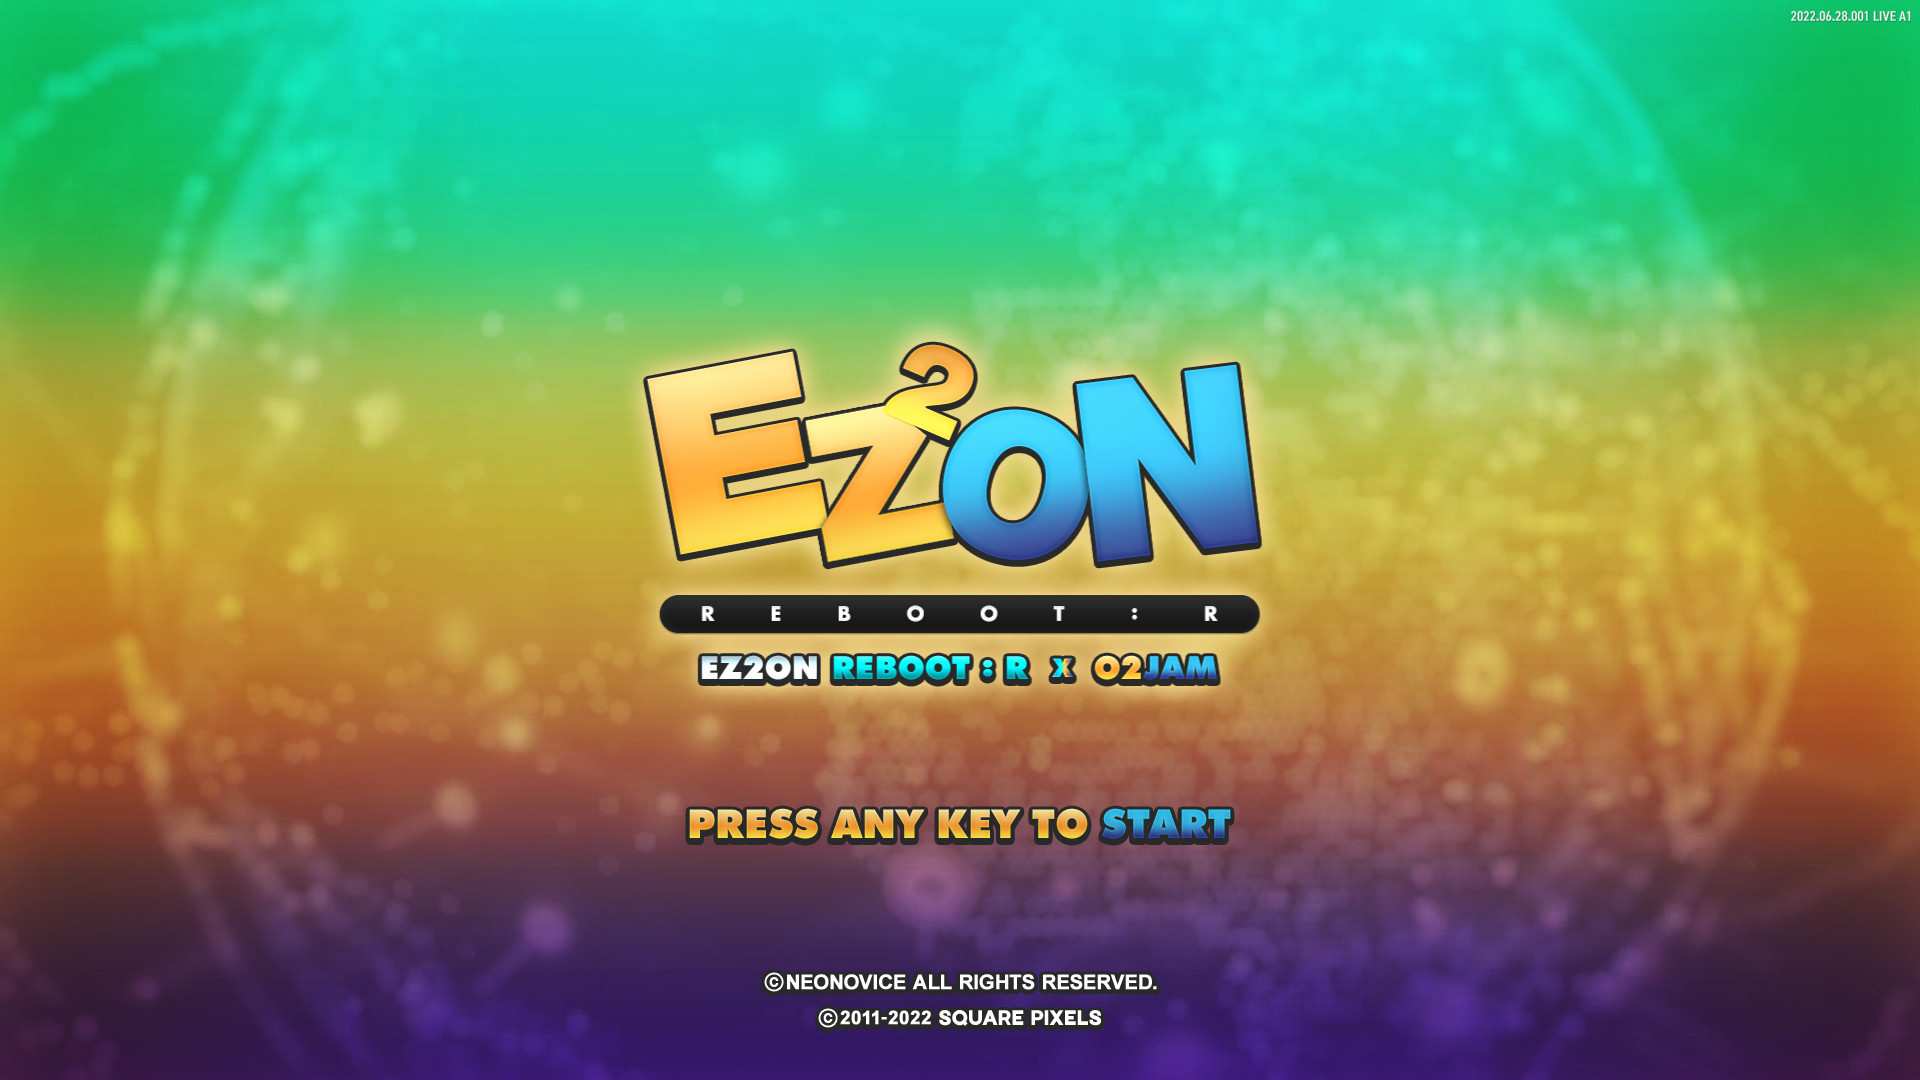 EZ2ON REBOOT : R - O2Jam Collaboration DLC Featured Screenshot #1